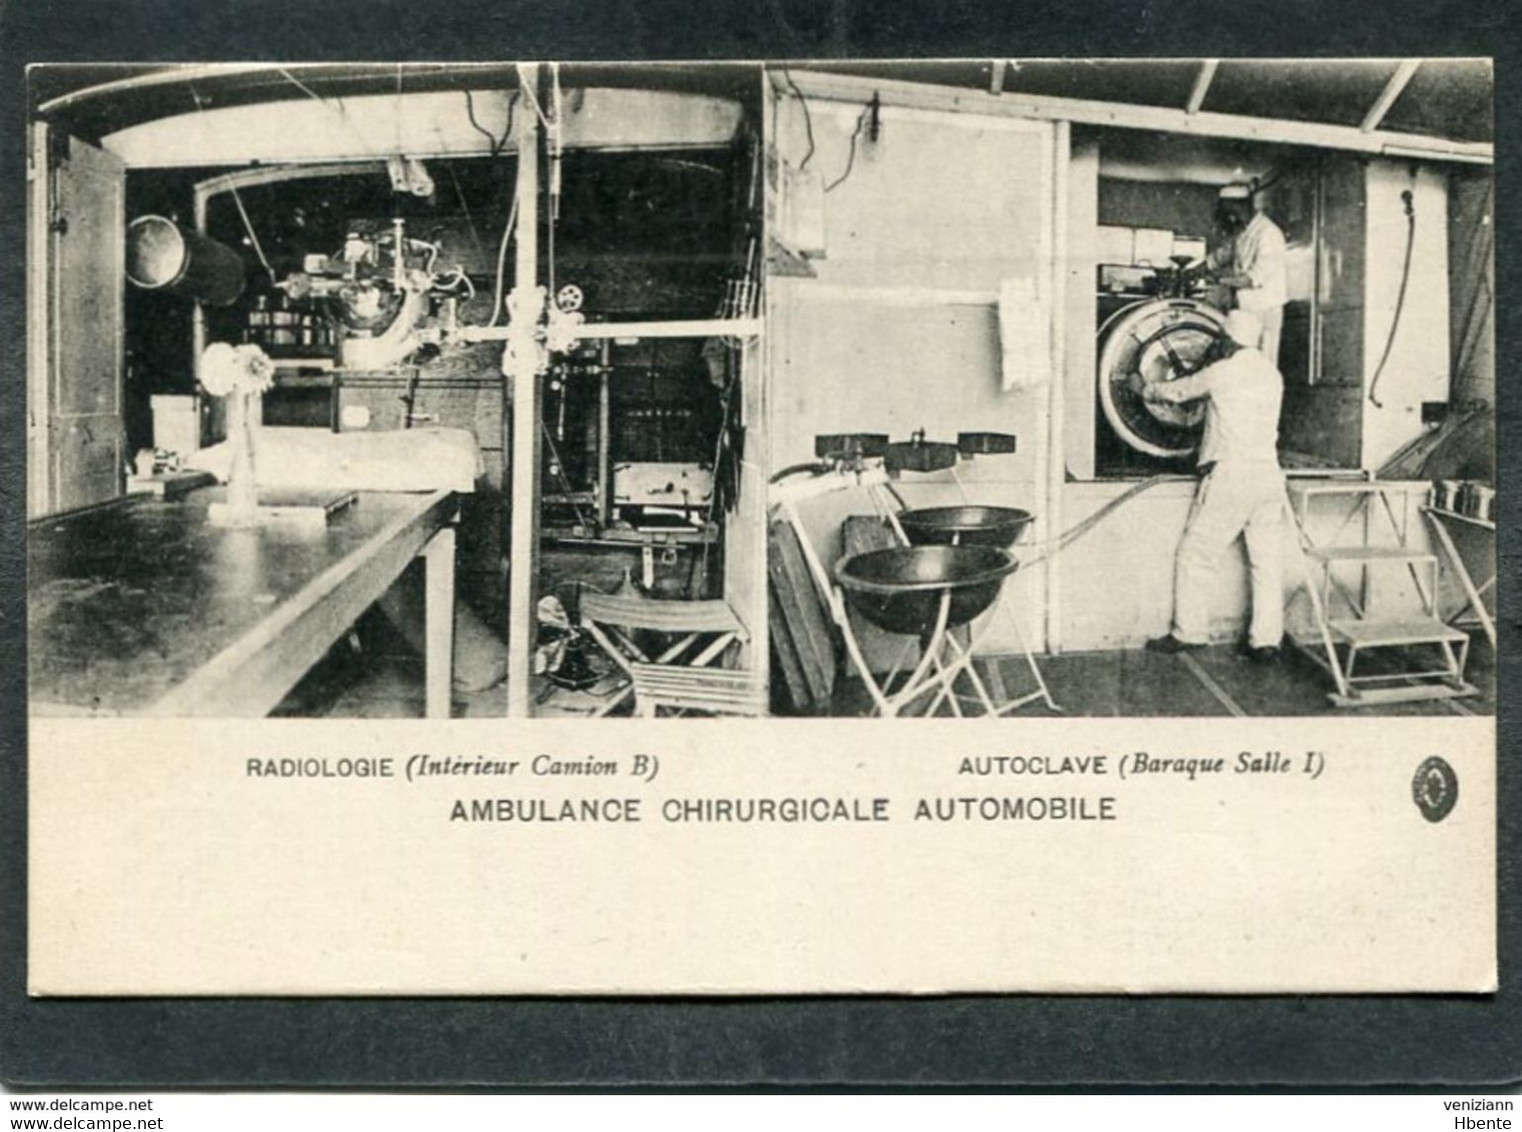 Ambulance Chirurgicale Automobile - Radiologie (Camion B) Autoclave (Baraque Salle 1) (Photo) - Automobile